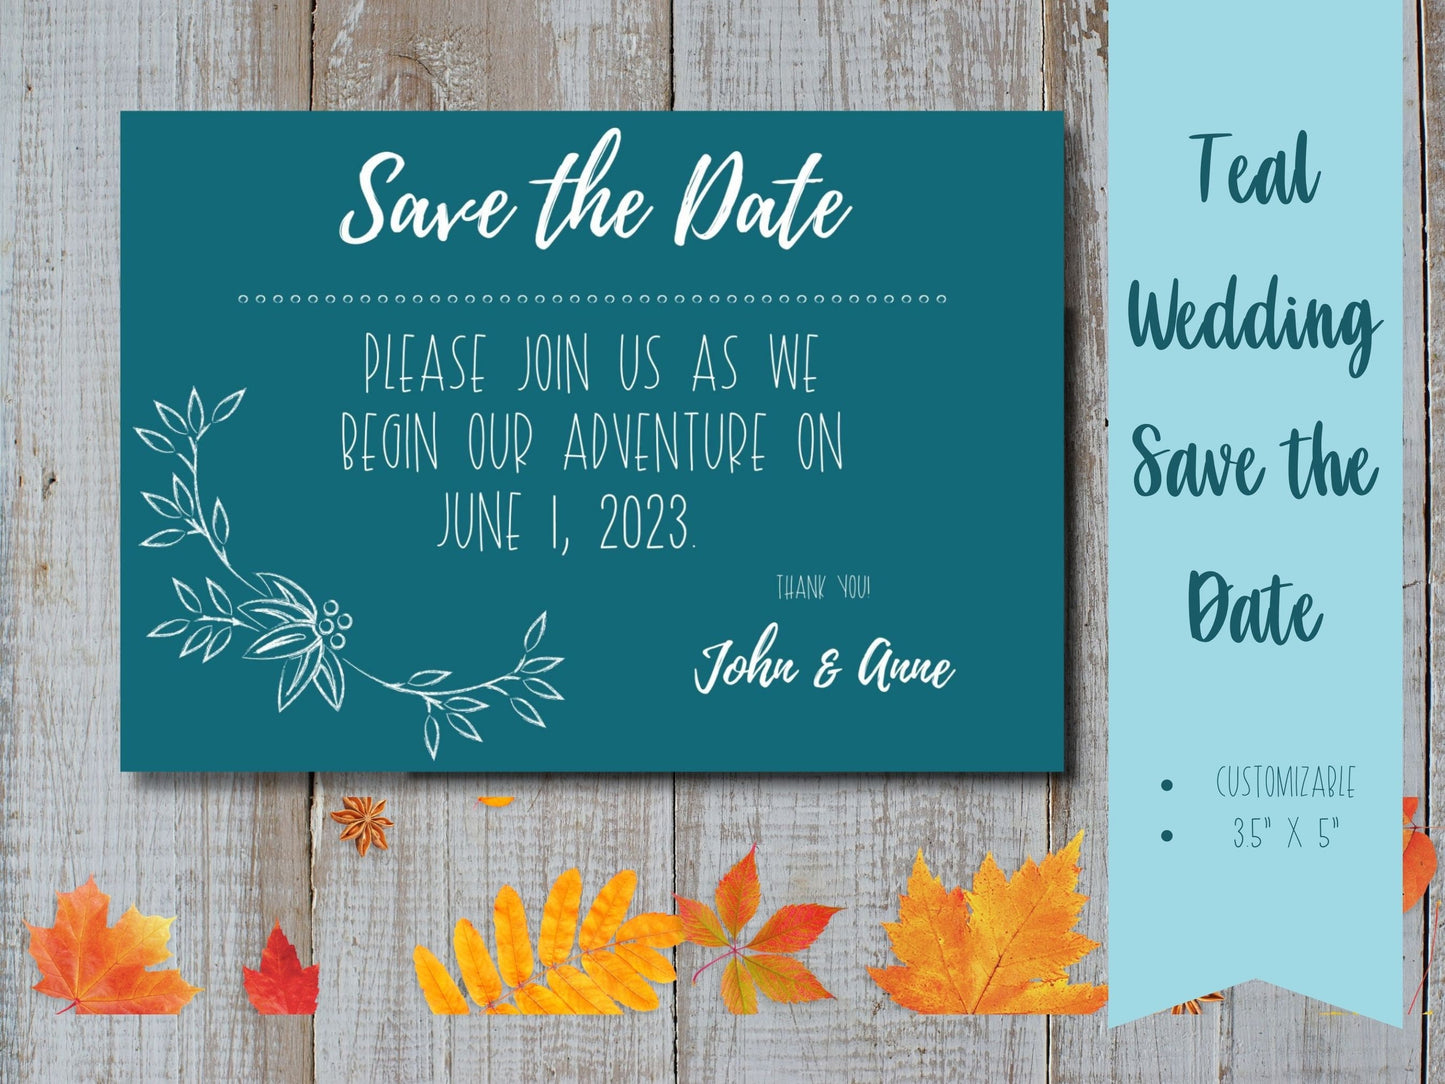 Beautiful Teal Wedding Save the Date Card in Jewel Tones- Customizable Fall Themed Wedding Save The Date